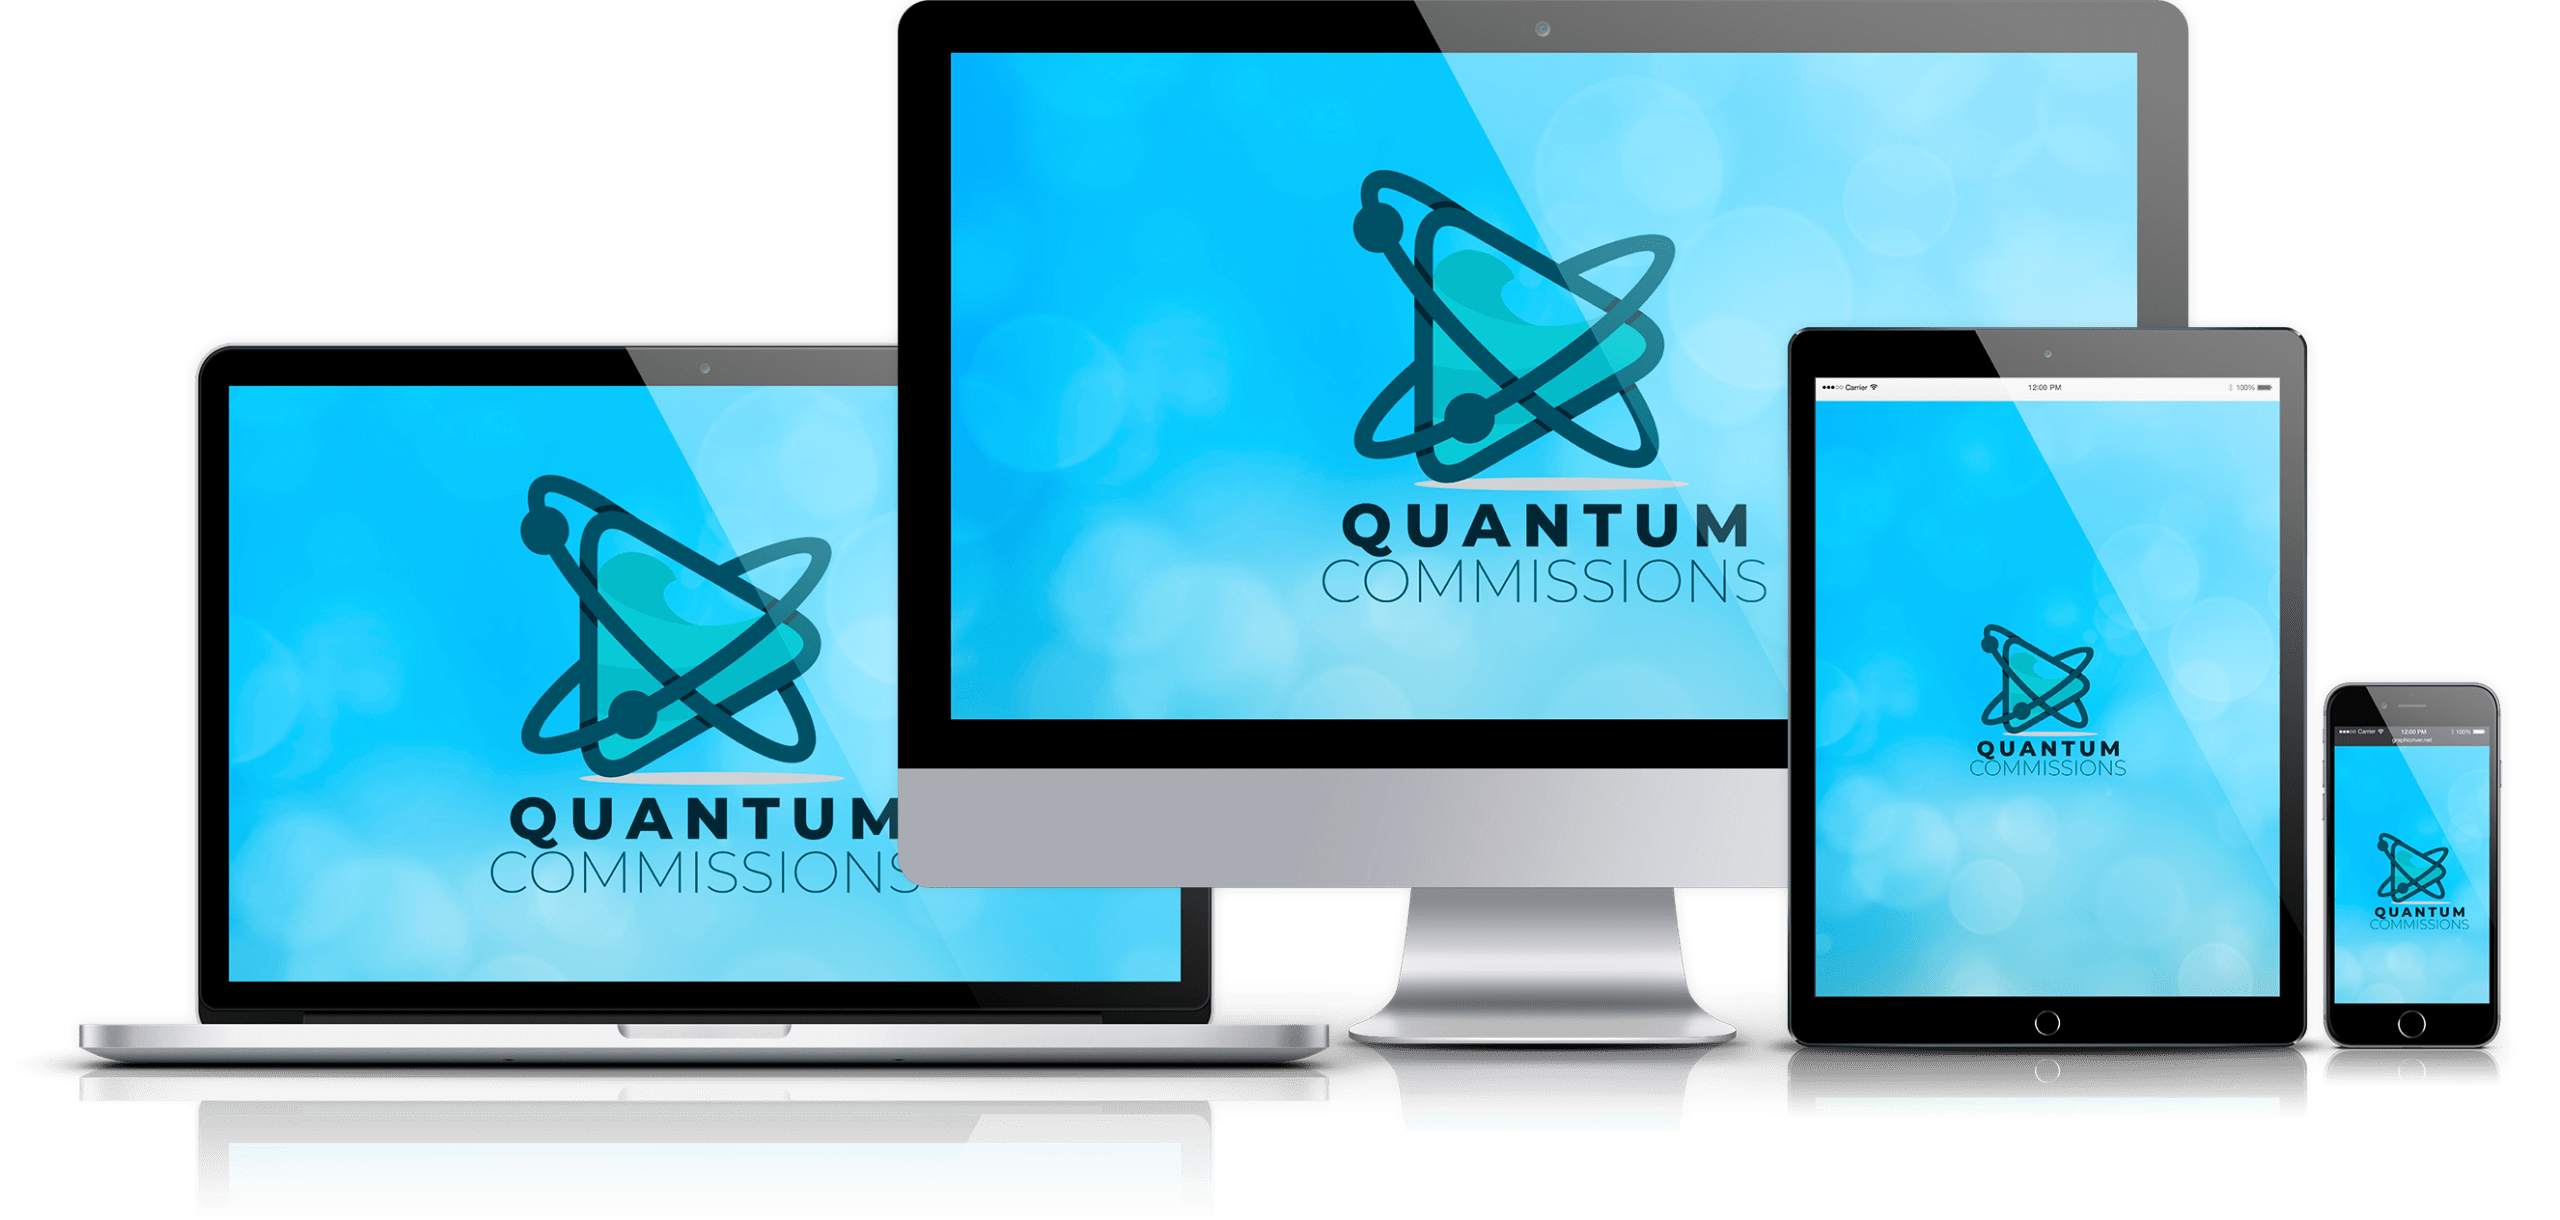 [GET] Quantum Commissions Download